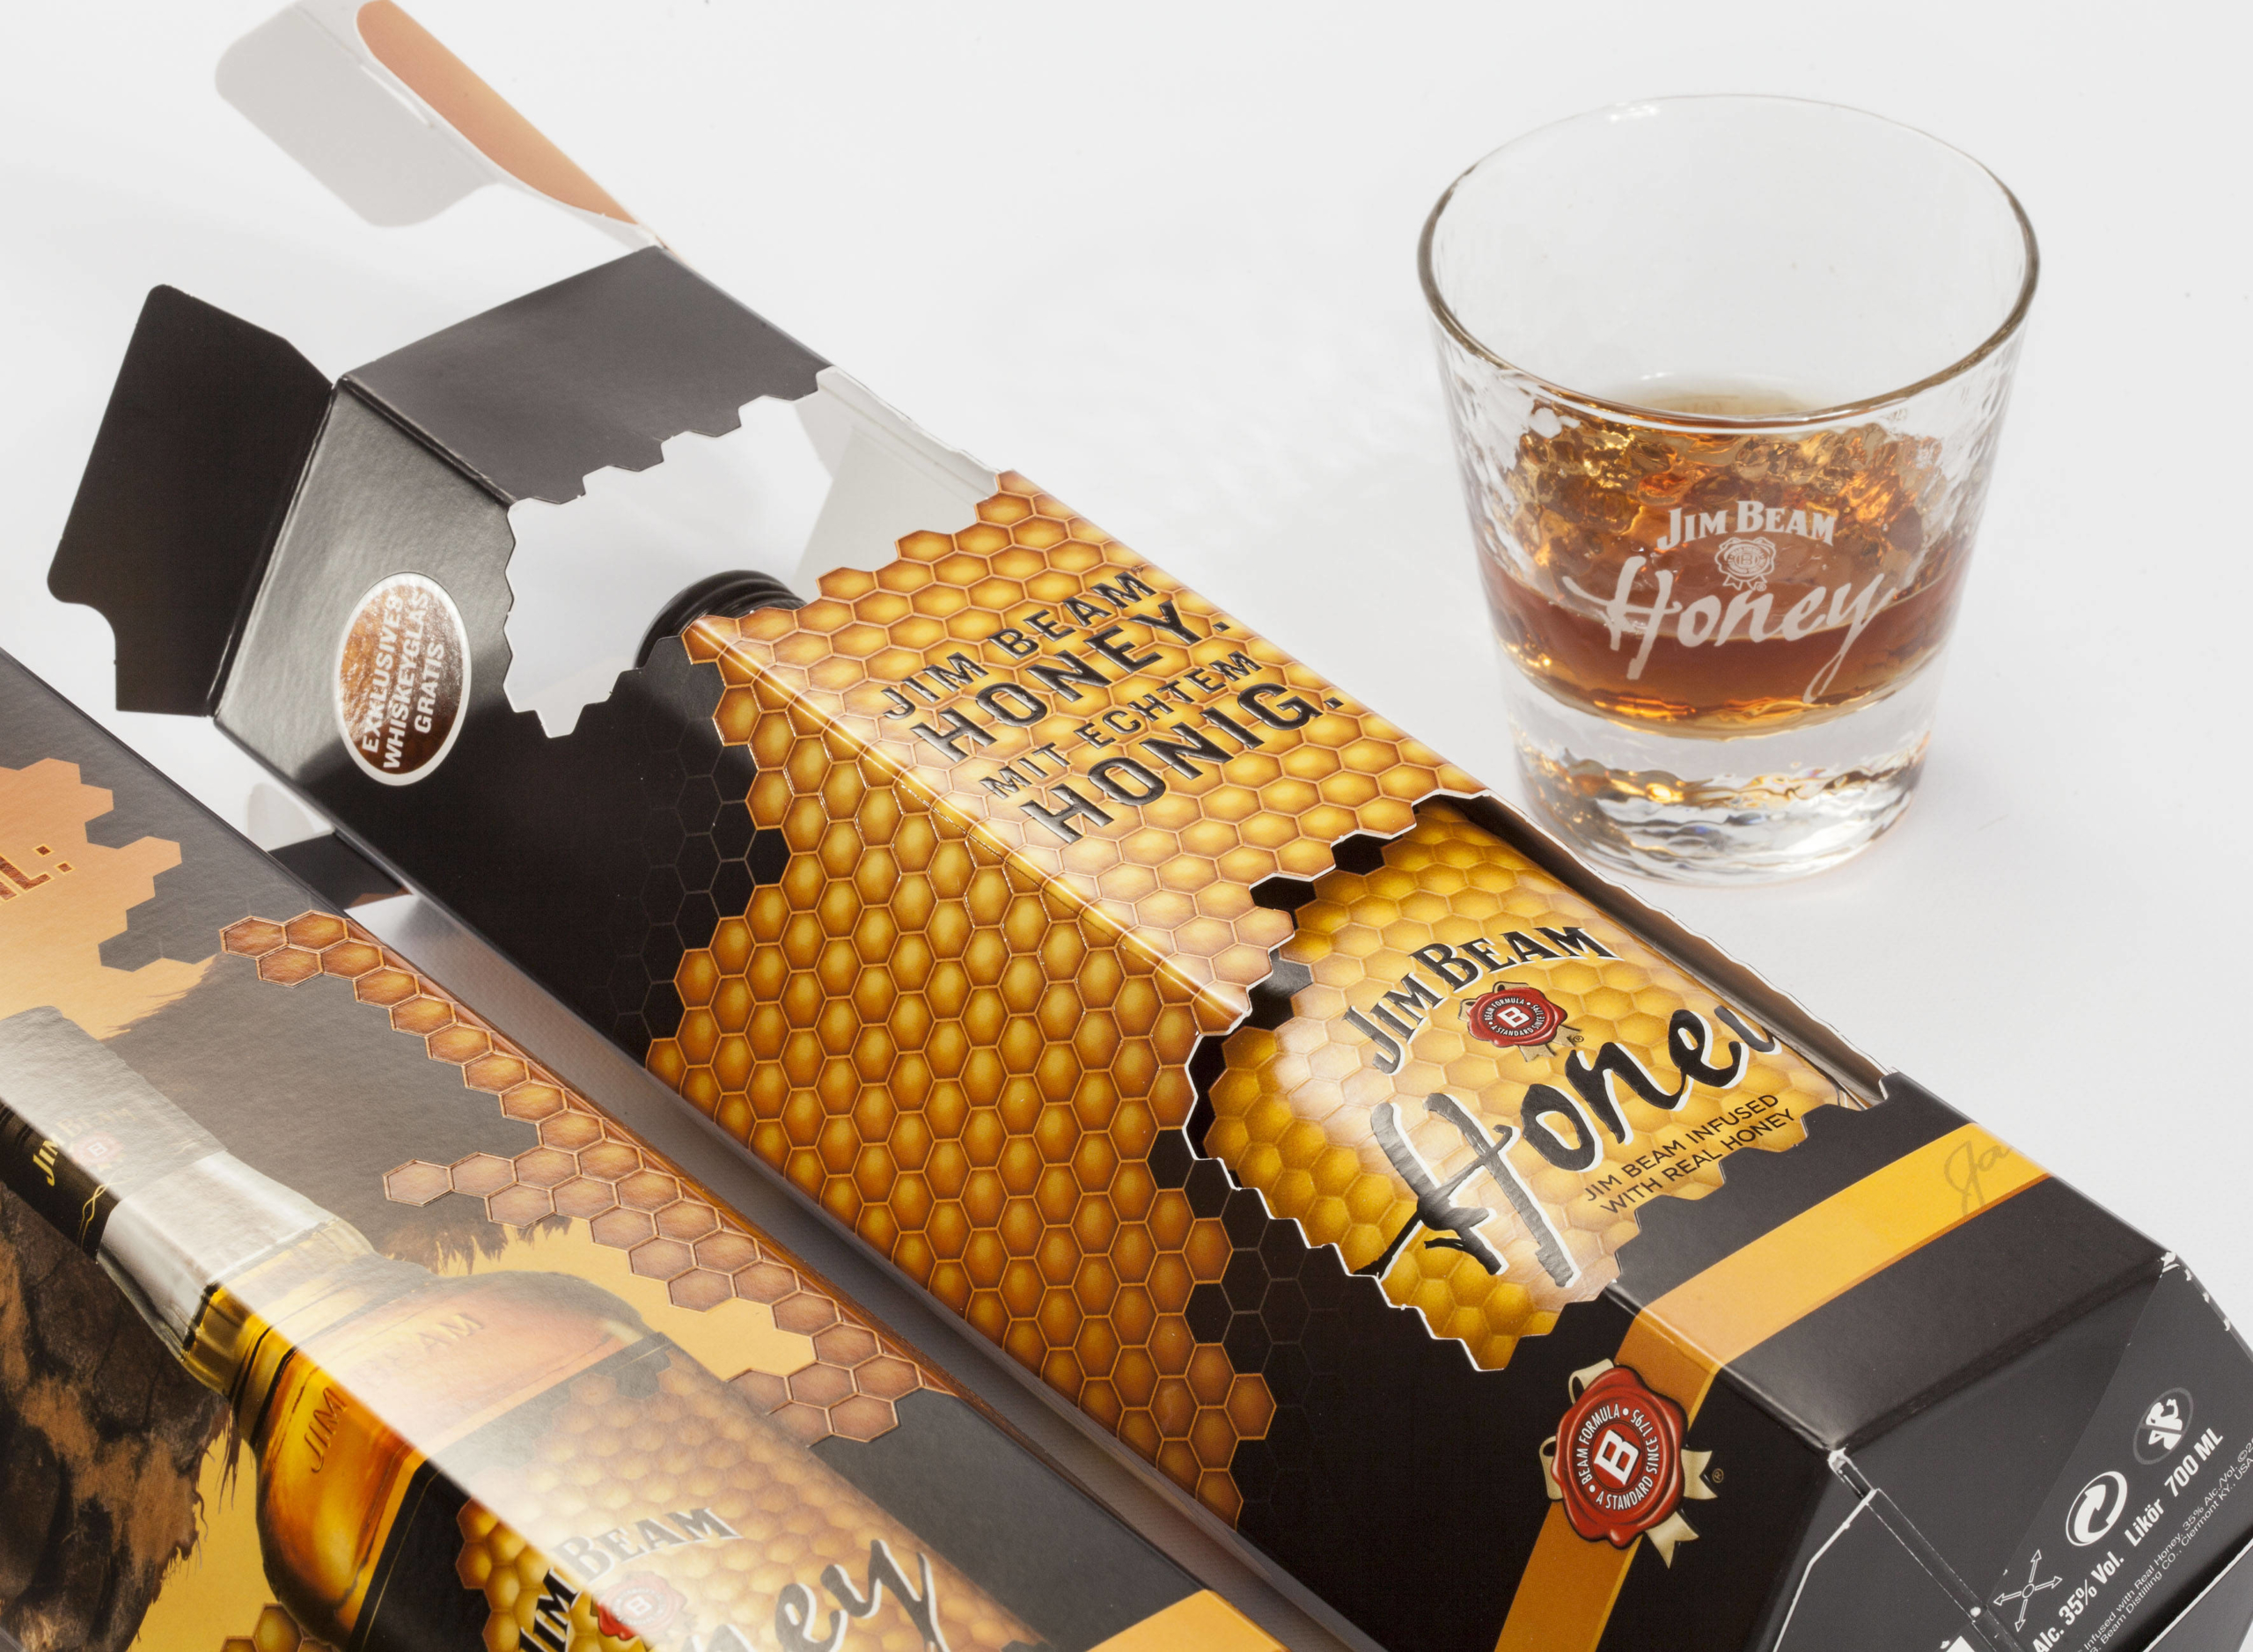 Jim Beam Honey Promotional Packaging